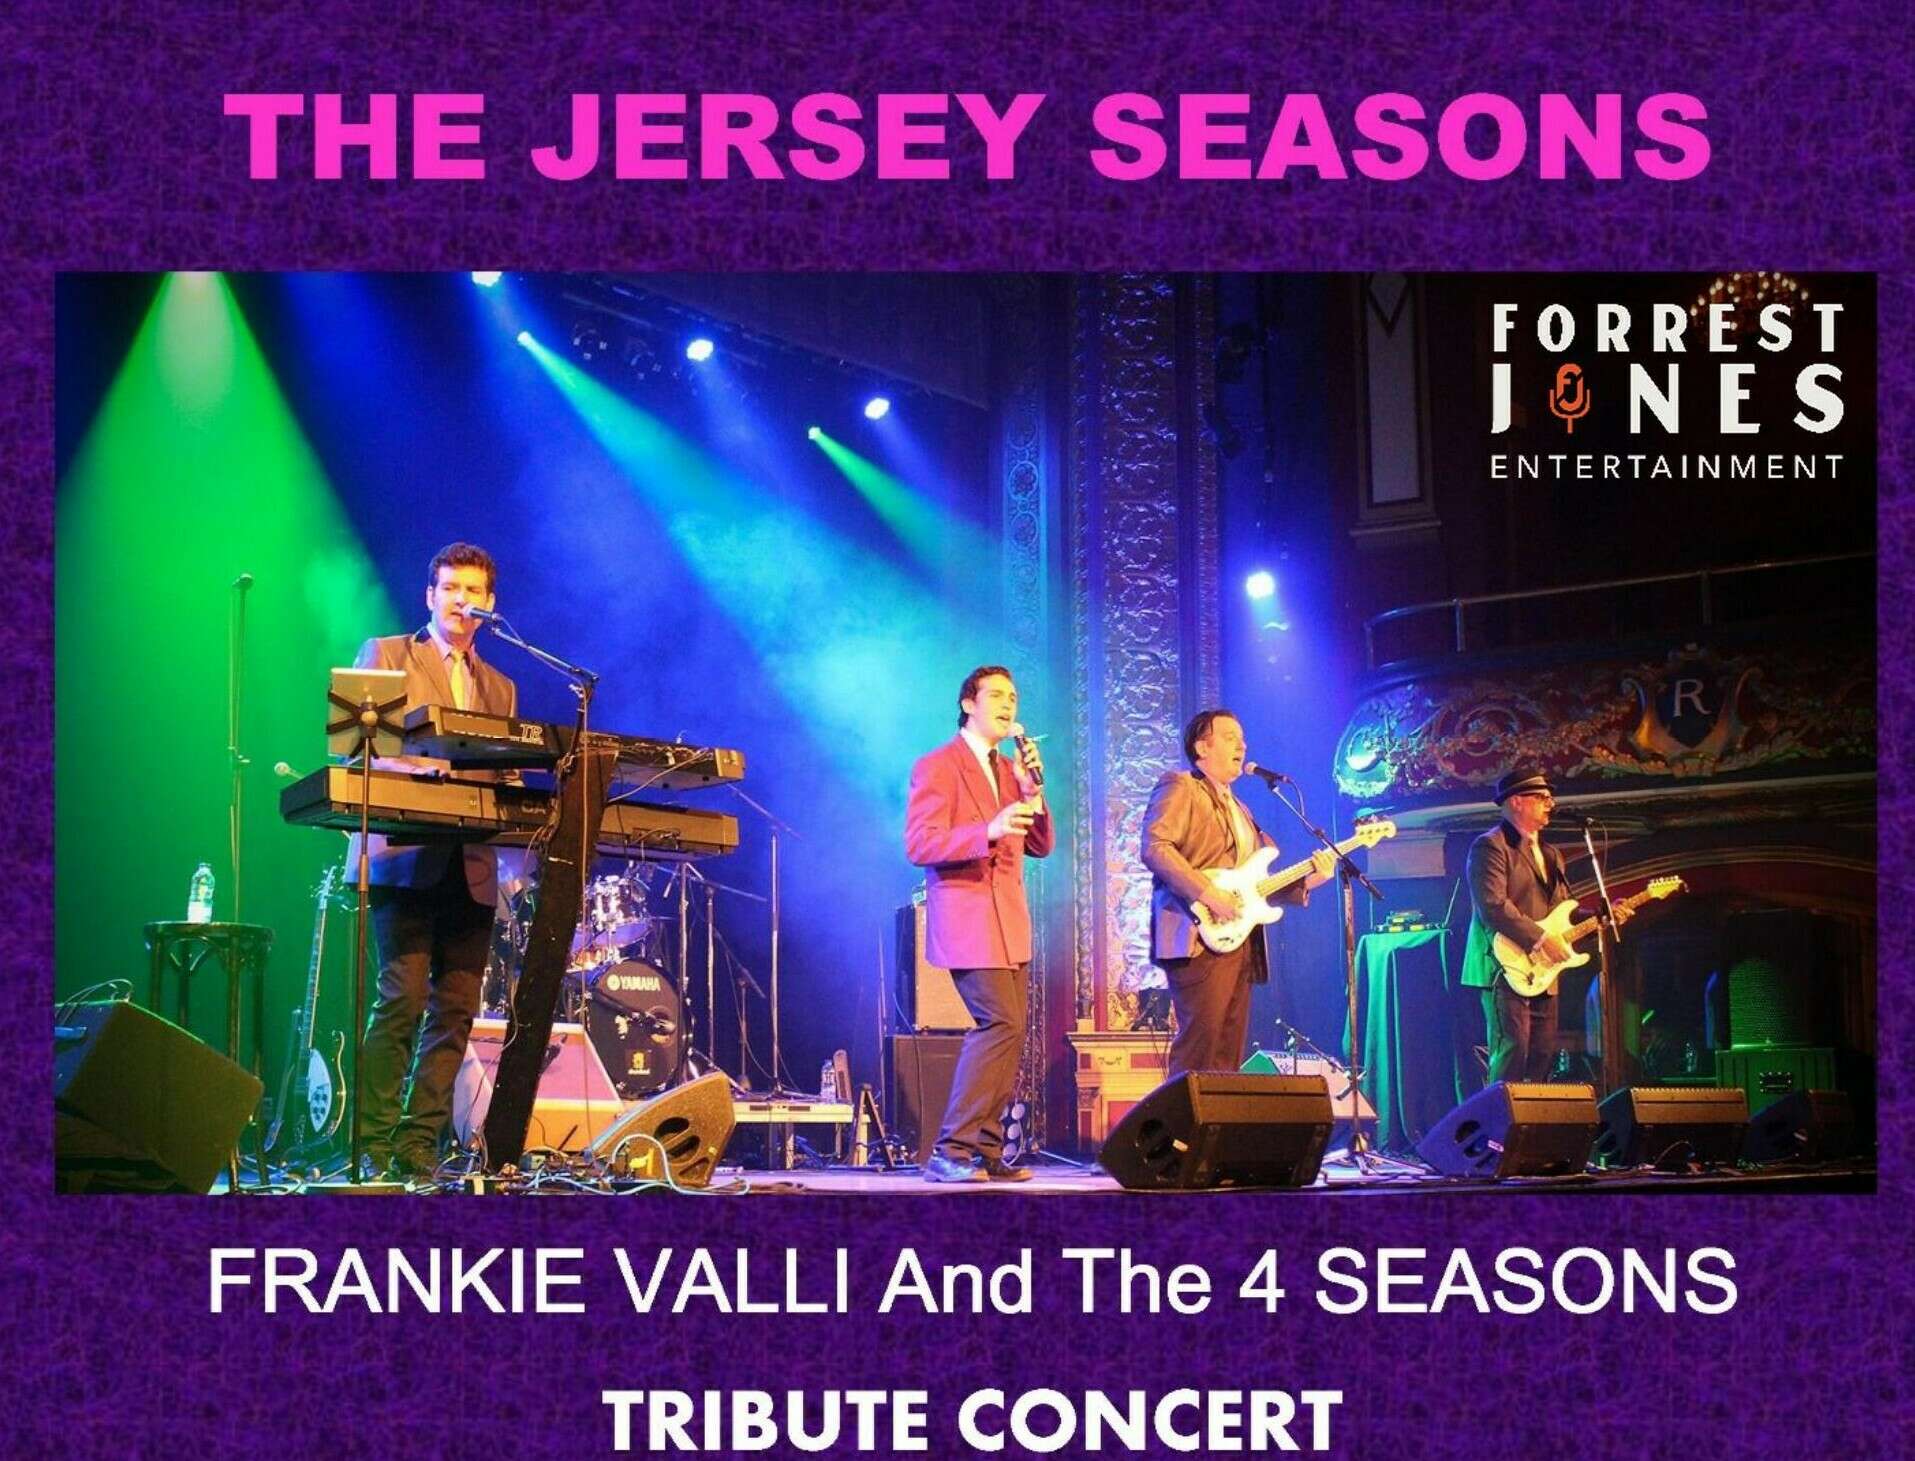 The Jersey Seasons